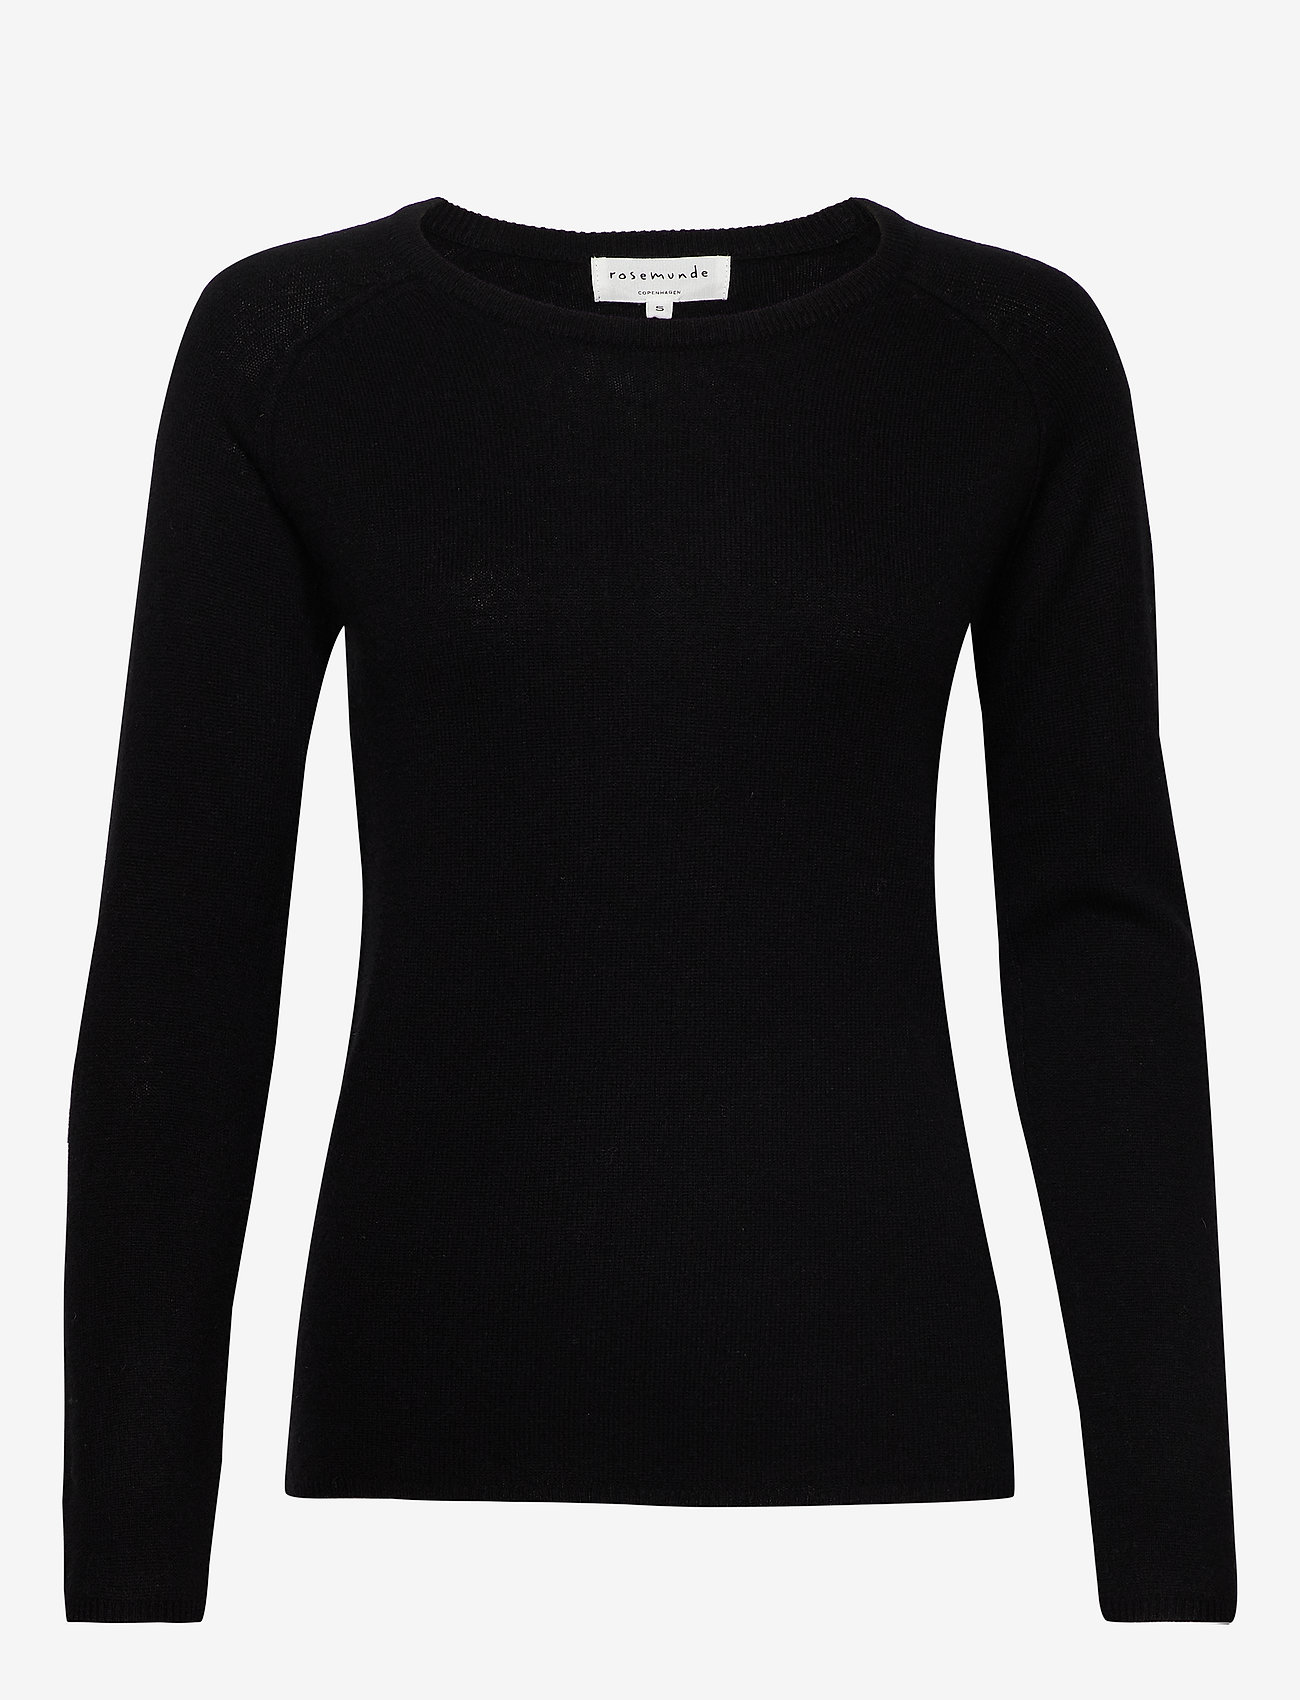 Rosemunde - Wool & cashmere pullover - strikkegensere - black - 0